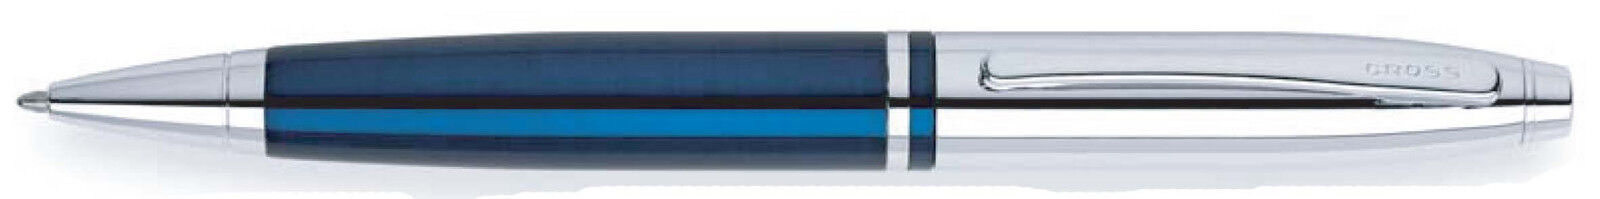 CROSS CALAIS BALLPOINT PEN AT0112-3 BLUE/CHROME WITH GIFT BOX